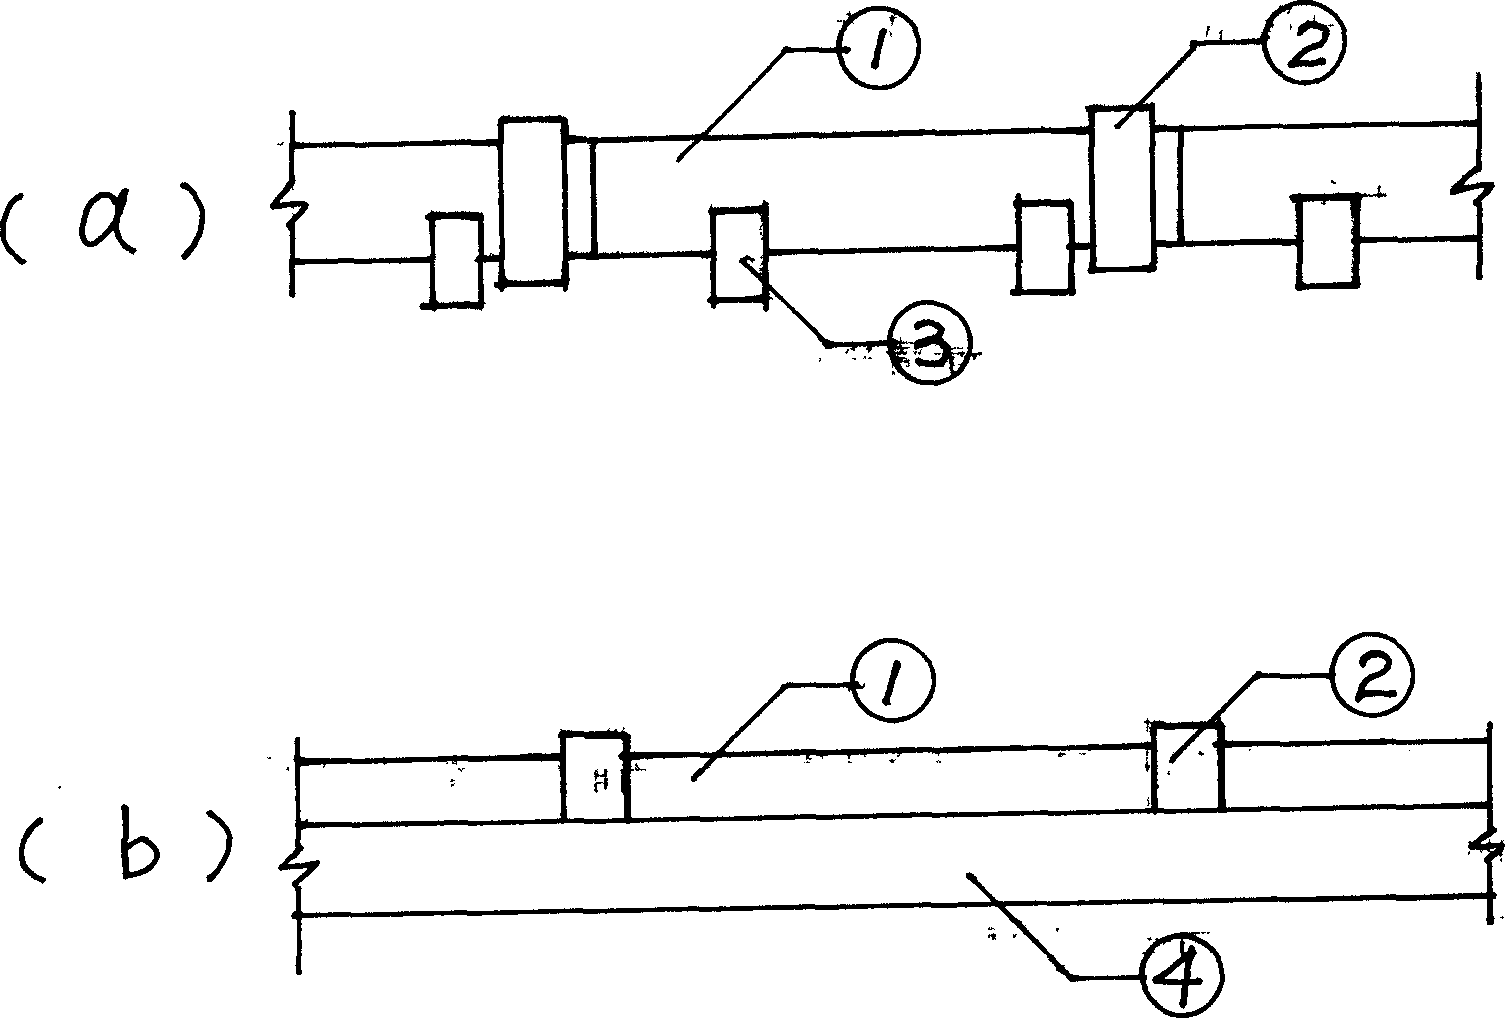 Foundation construction of precast concrete pipes